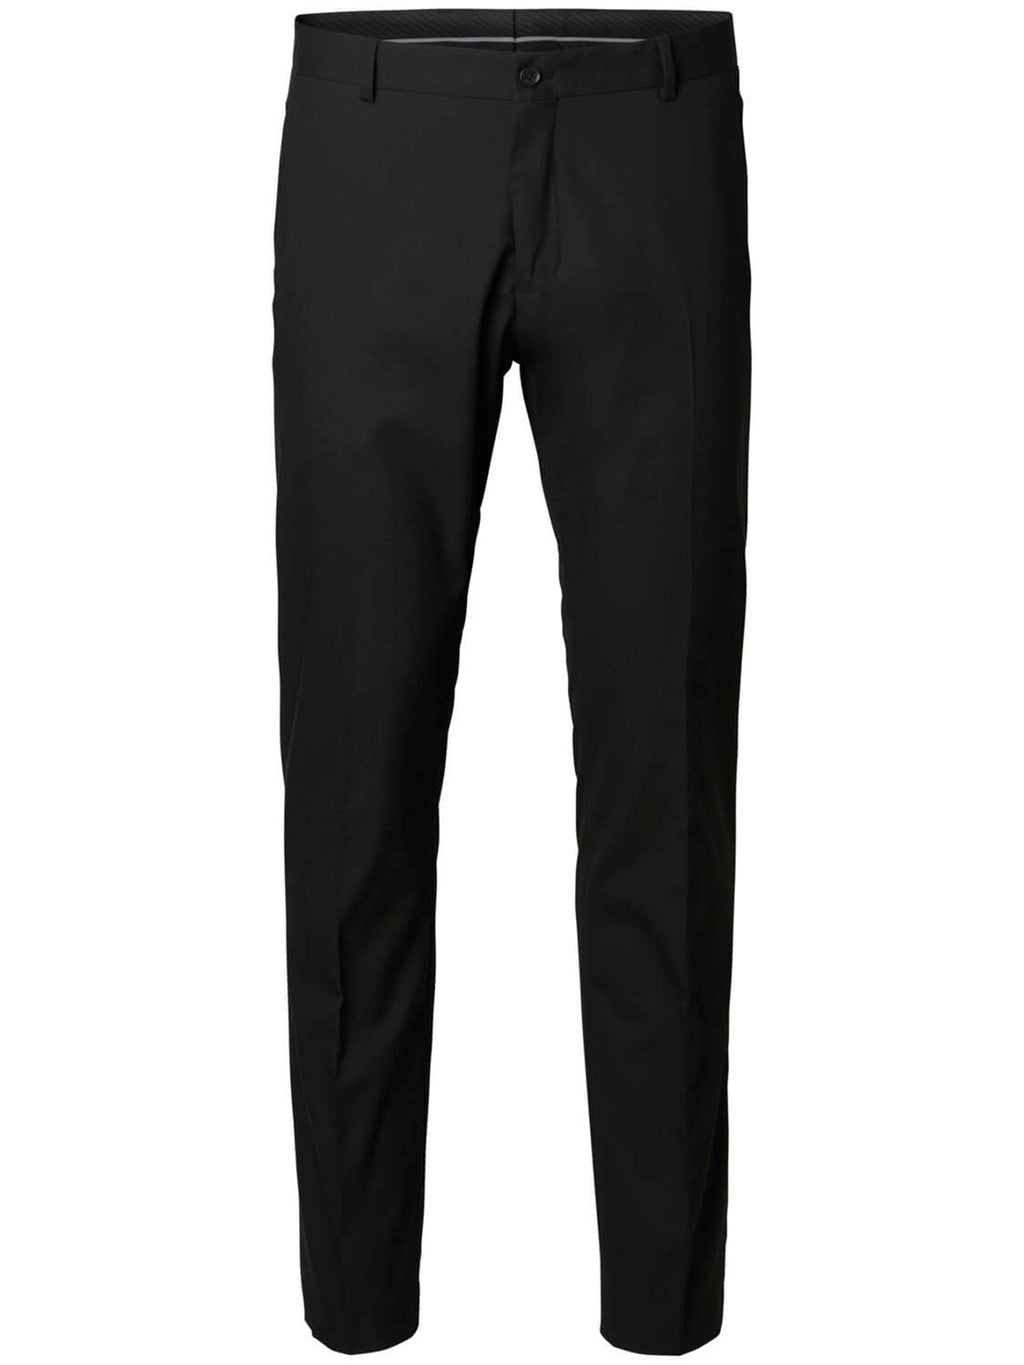 Pantalones de traje de ajuste delgado - negro